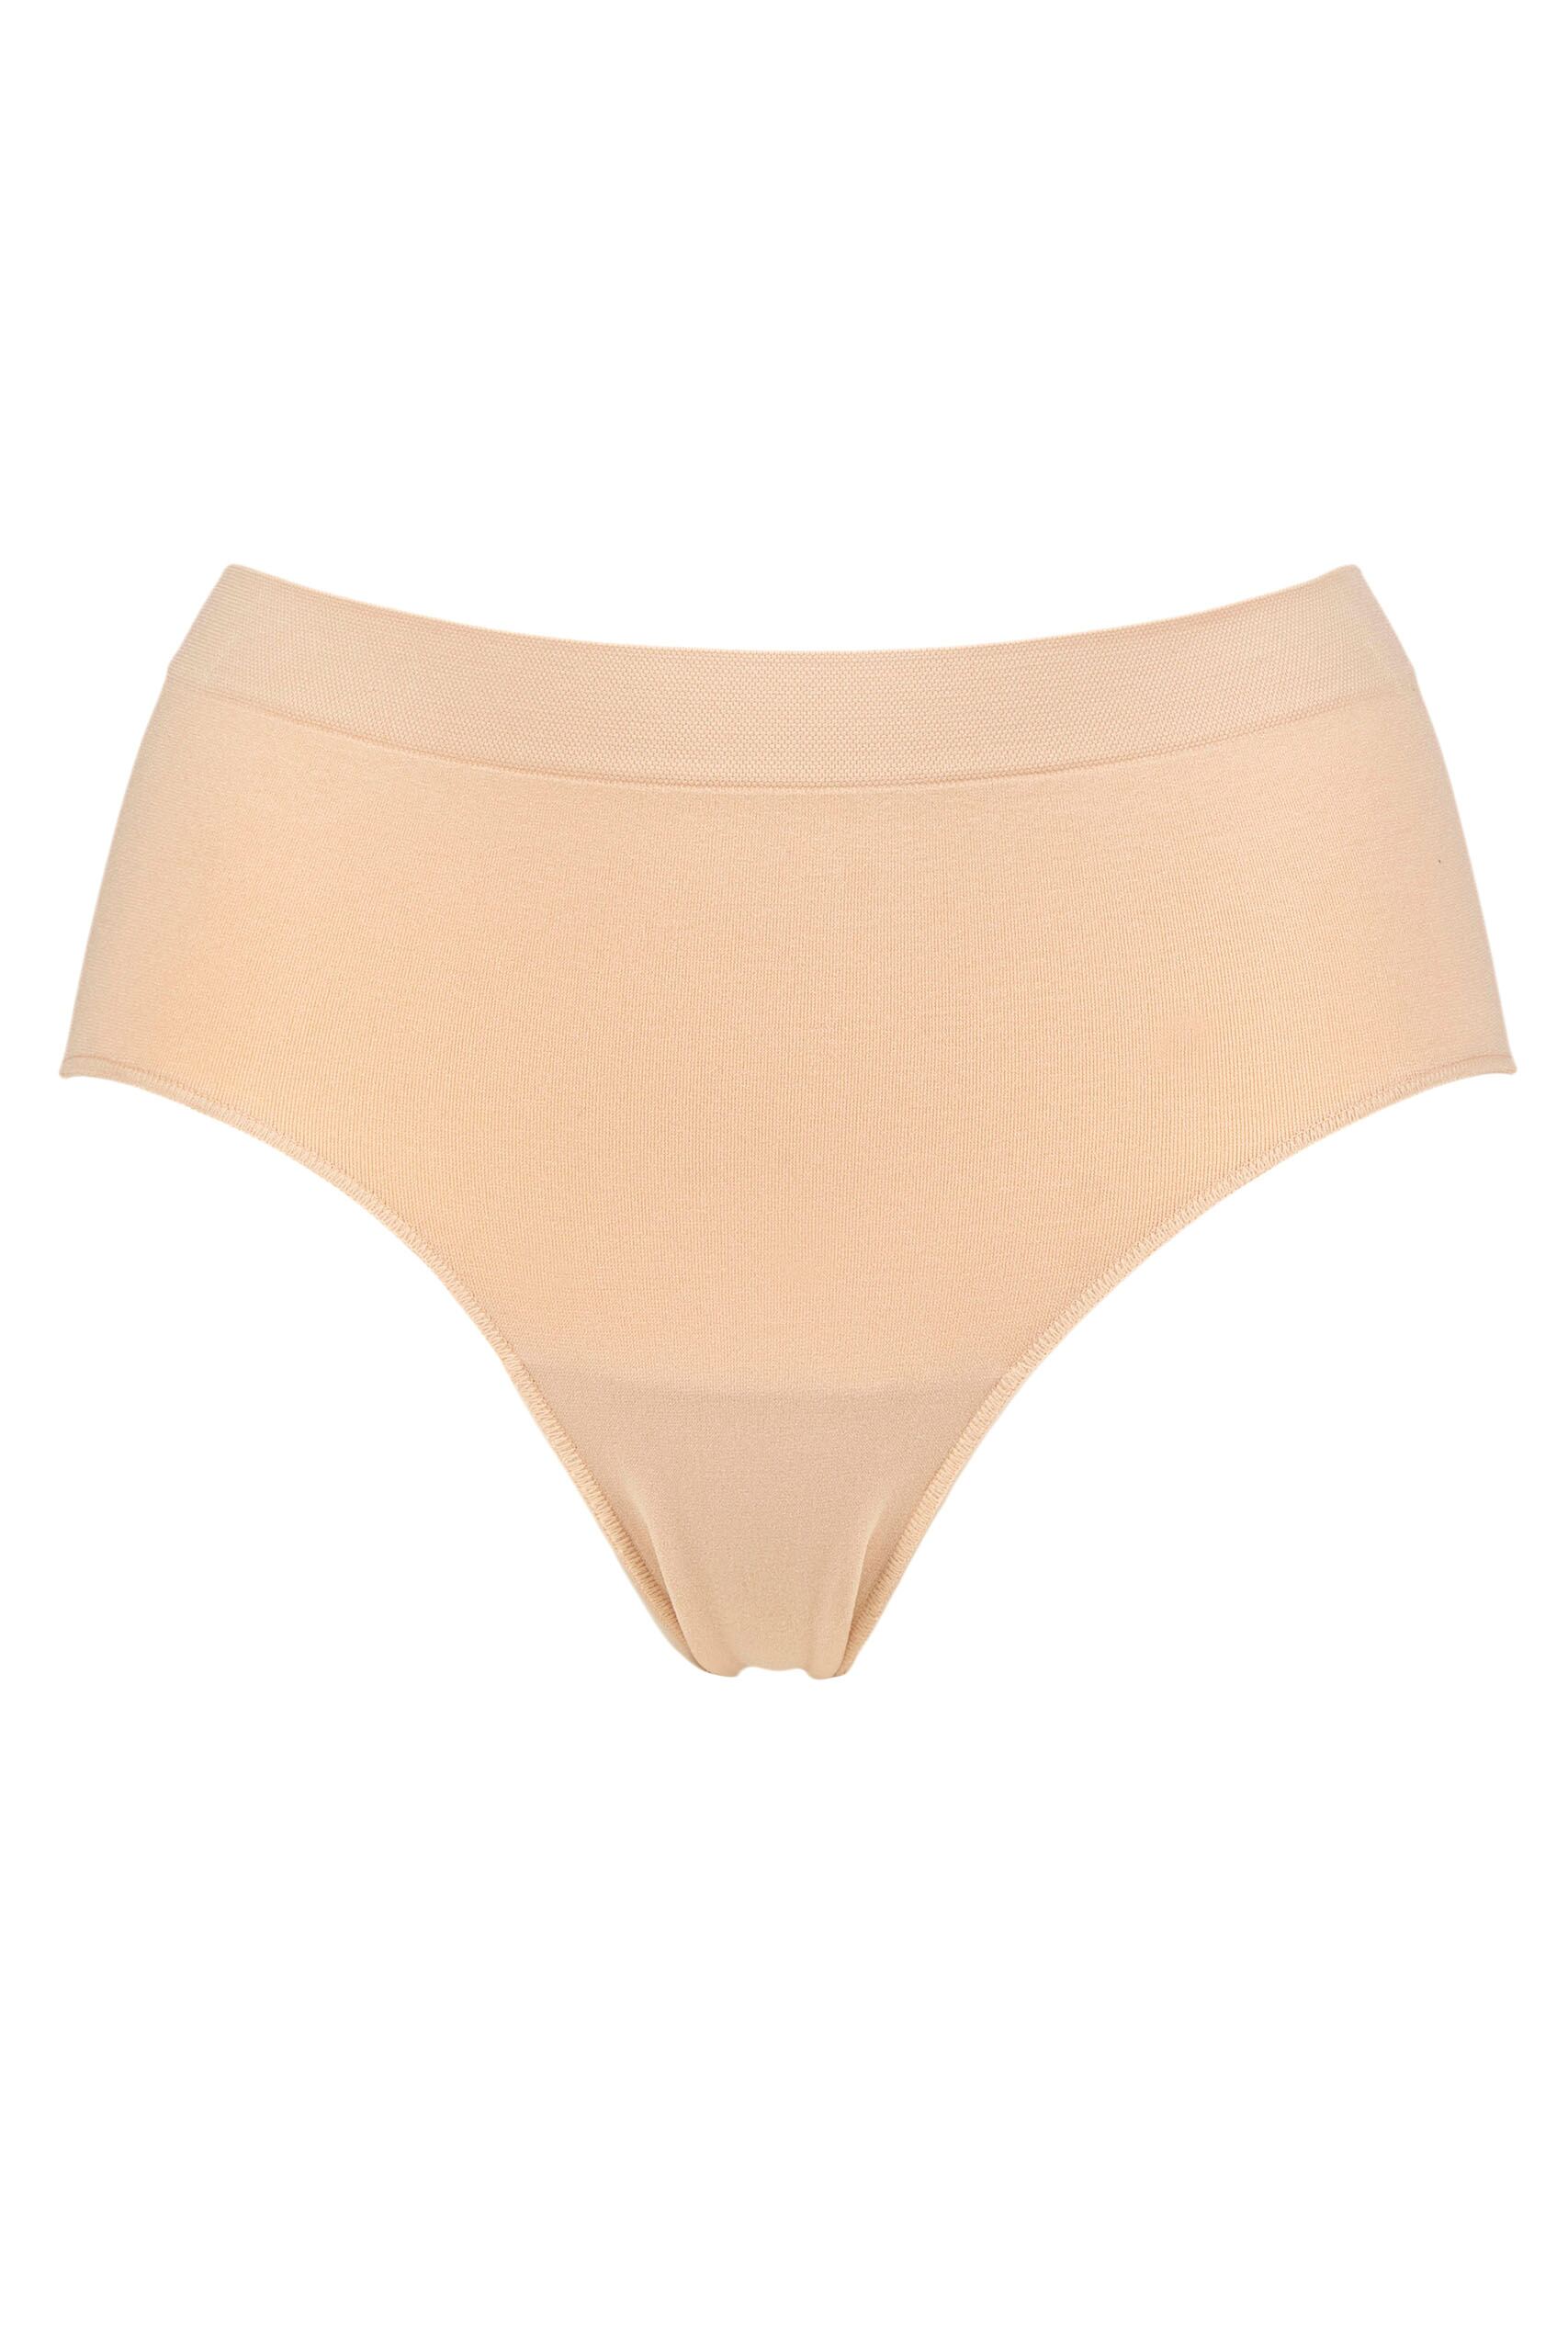 Ladies 1 Pack Ambra Bare Essentials Midi Brief Underwear Rose Beige UK 8-10